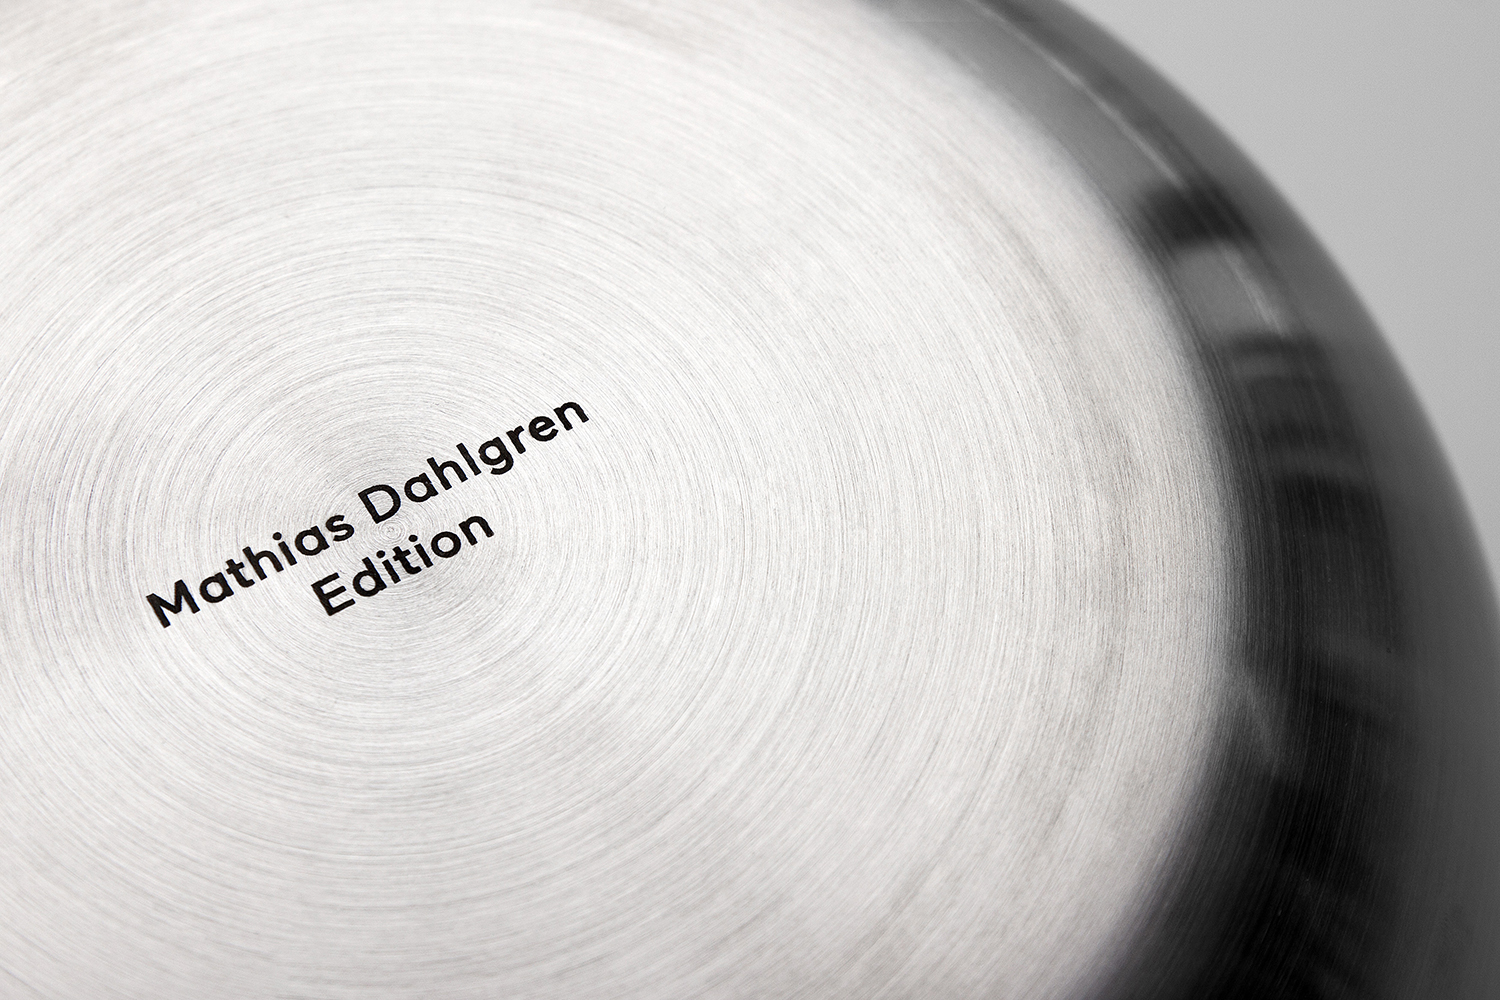 Packaging and identity designed by Essen International for contemporary kitchen appliance range Mathias Dahlgren Edition. Opinion by Richard Baird.